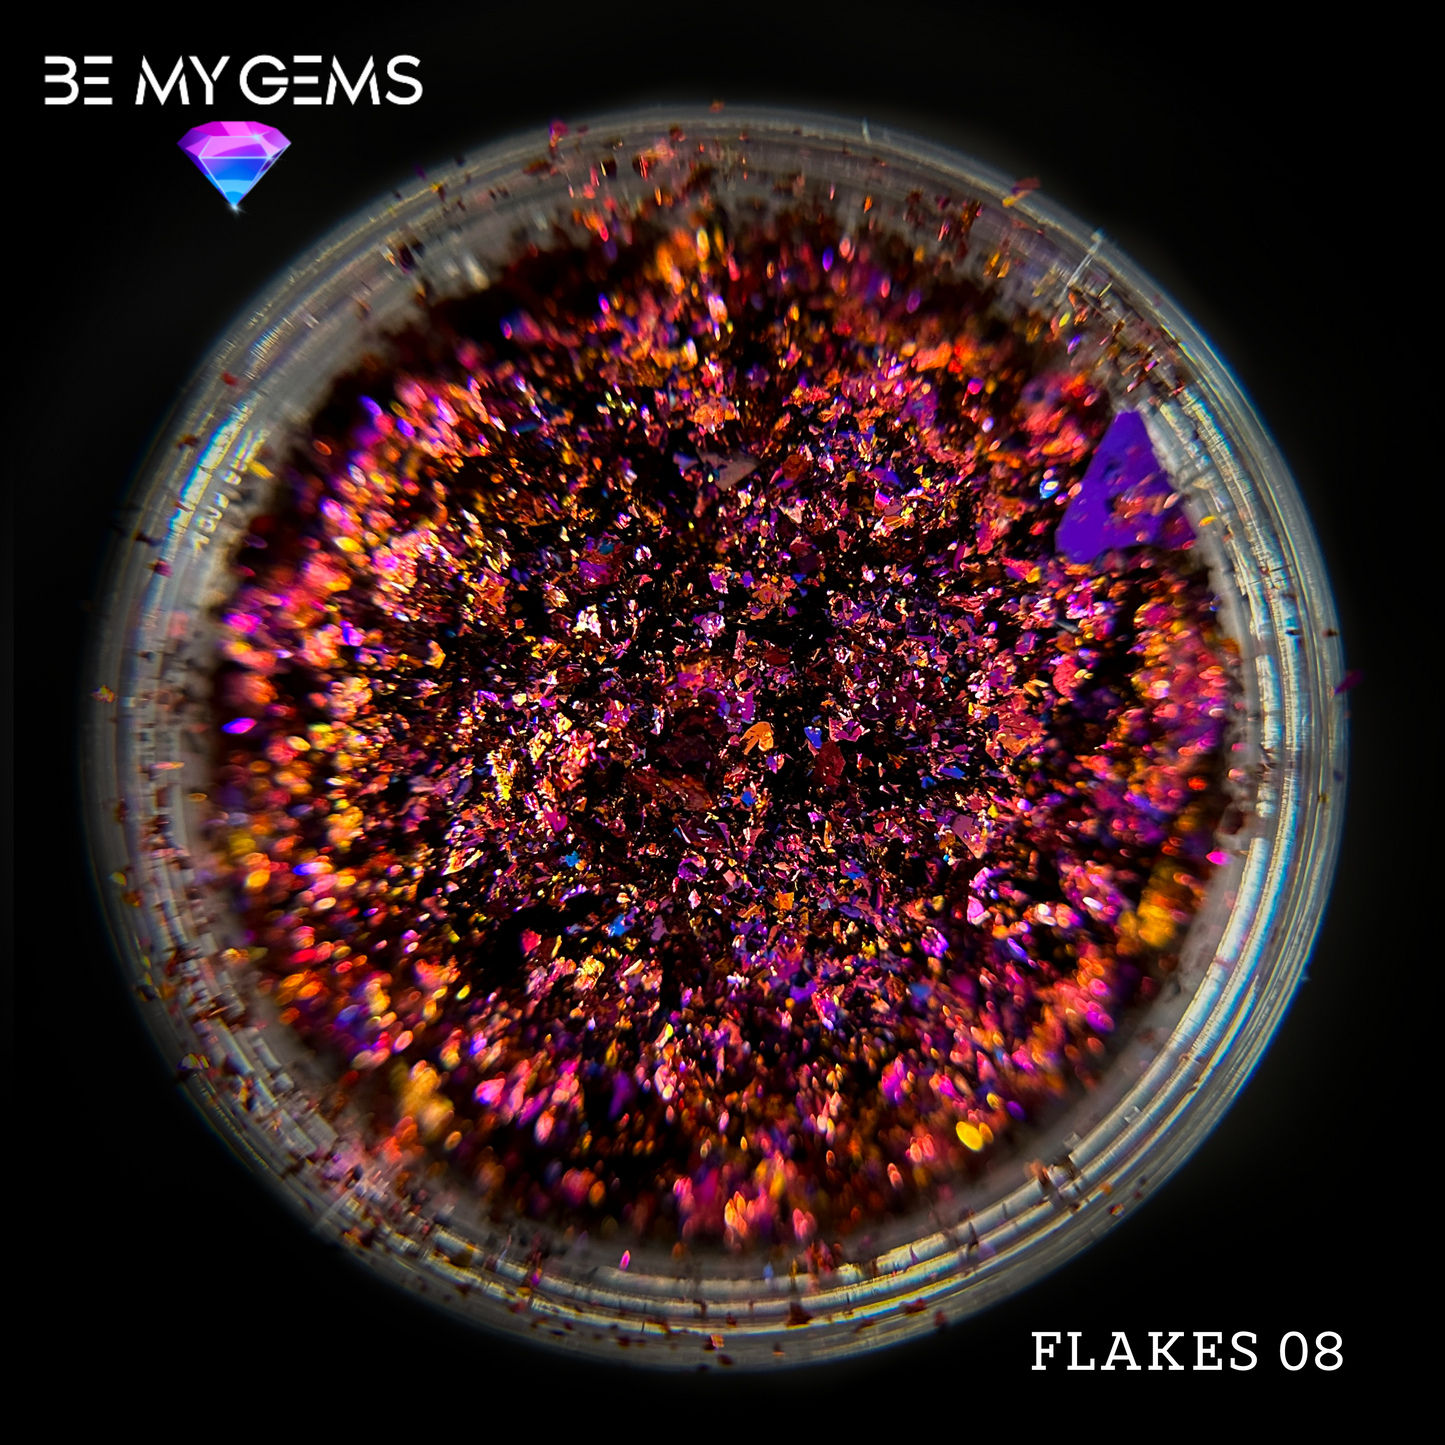 Flakes 08